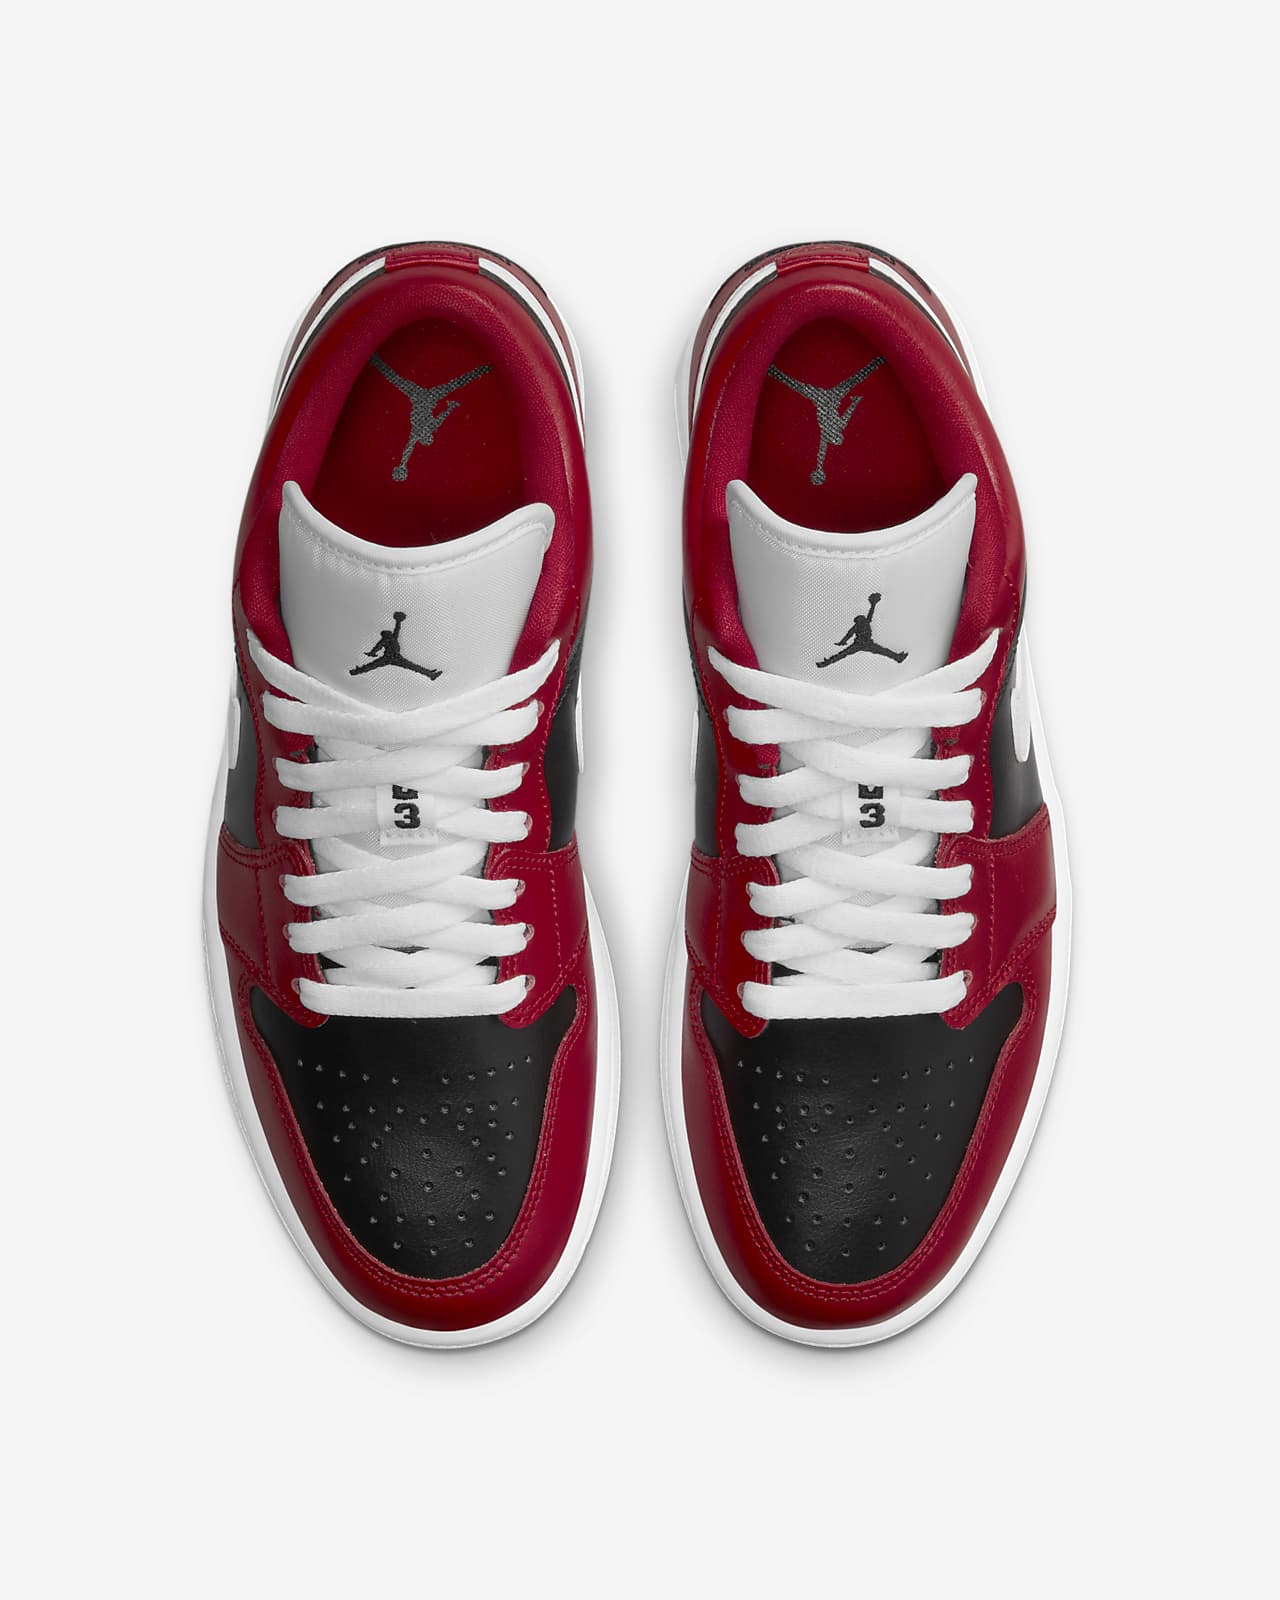 Air Jordan 1 Low Women's Shoe. Nike ID